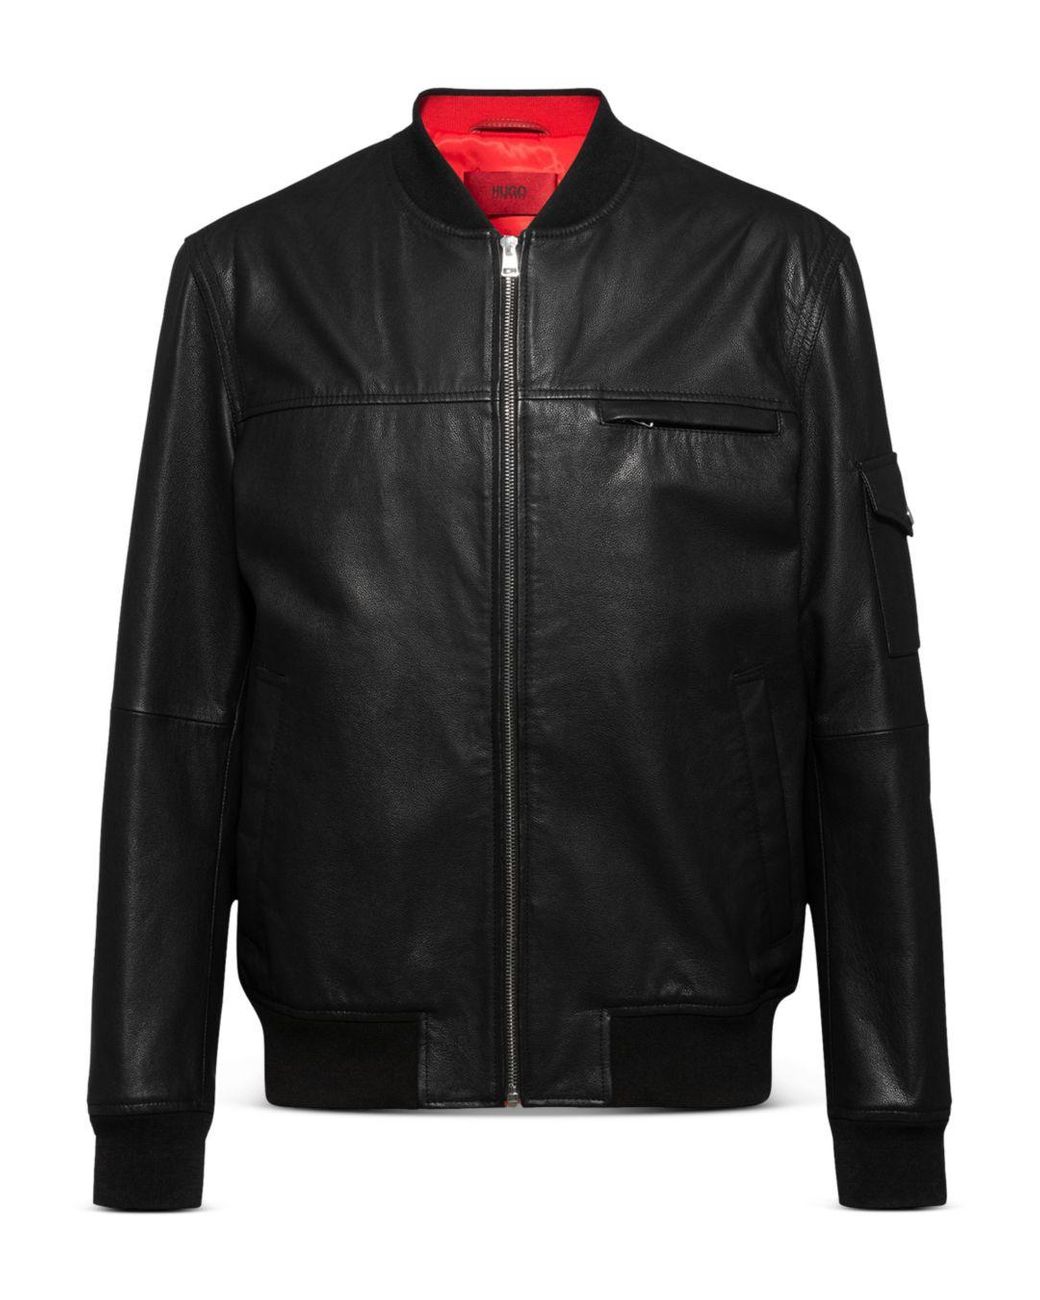 HUGO Livius Leather Bomber Jacket in Black for Men - Lyst